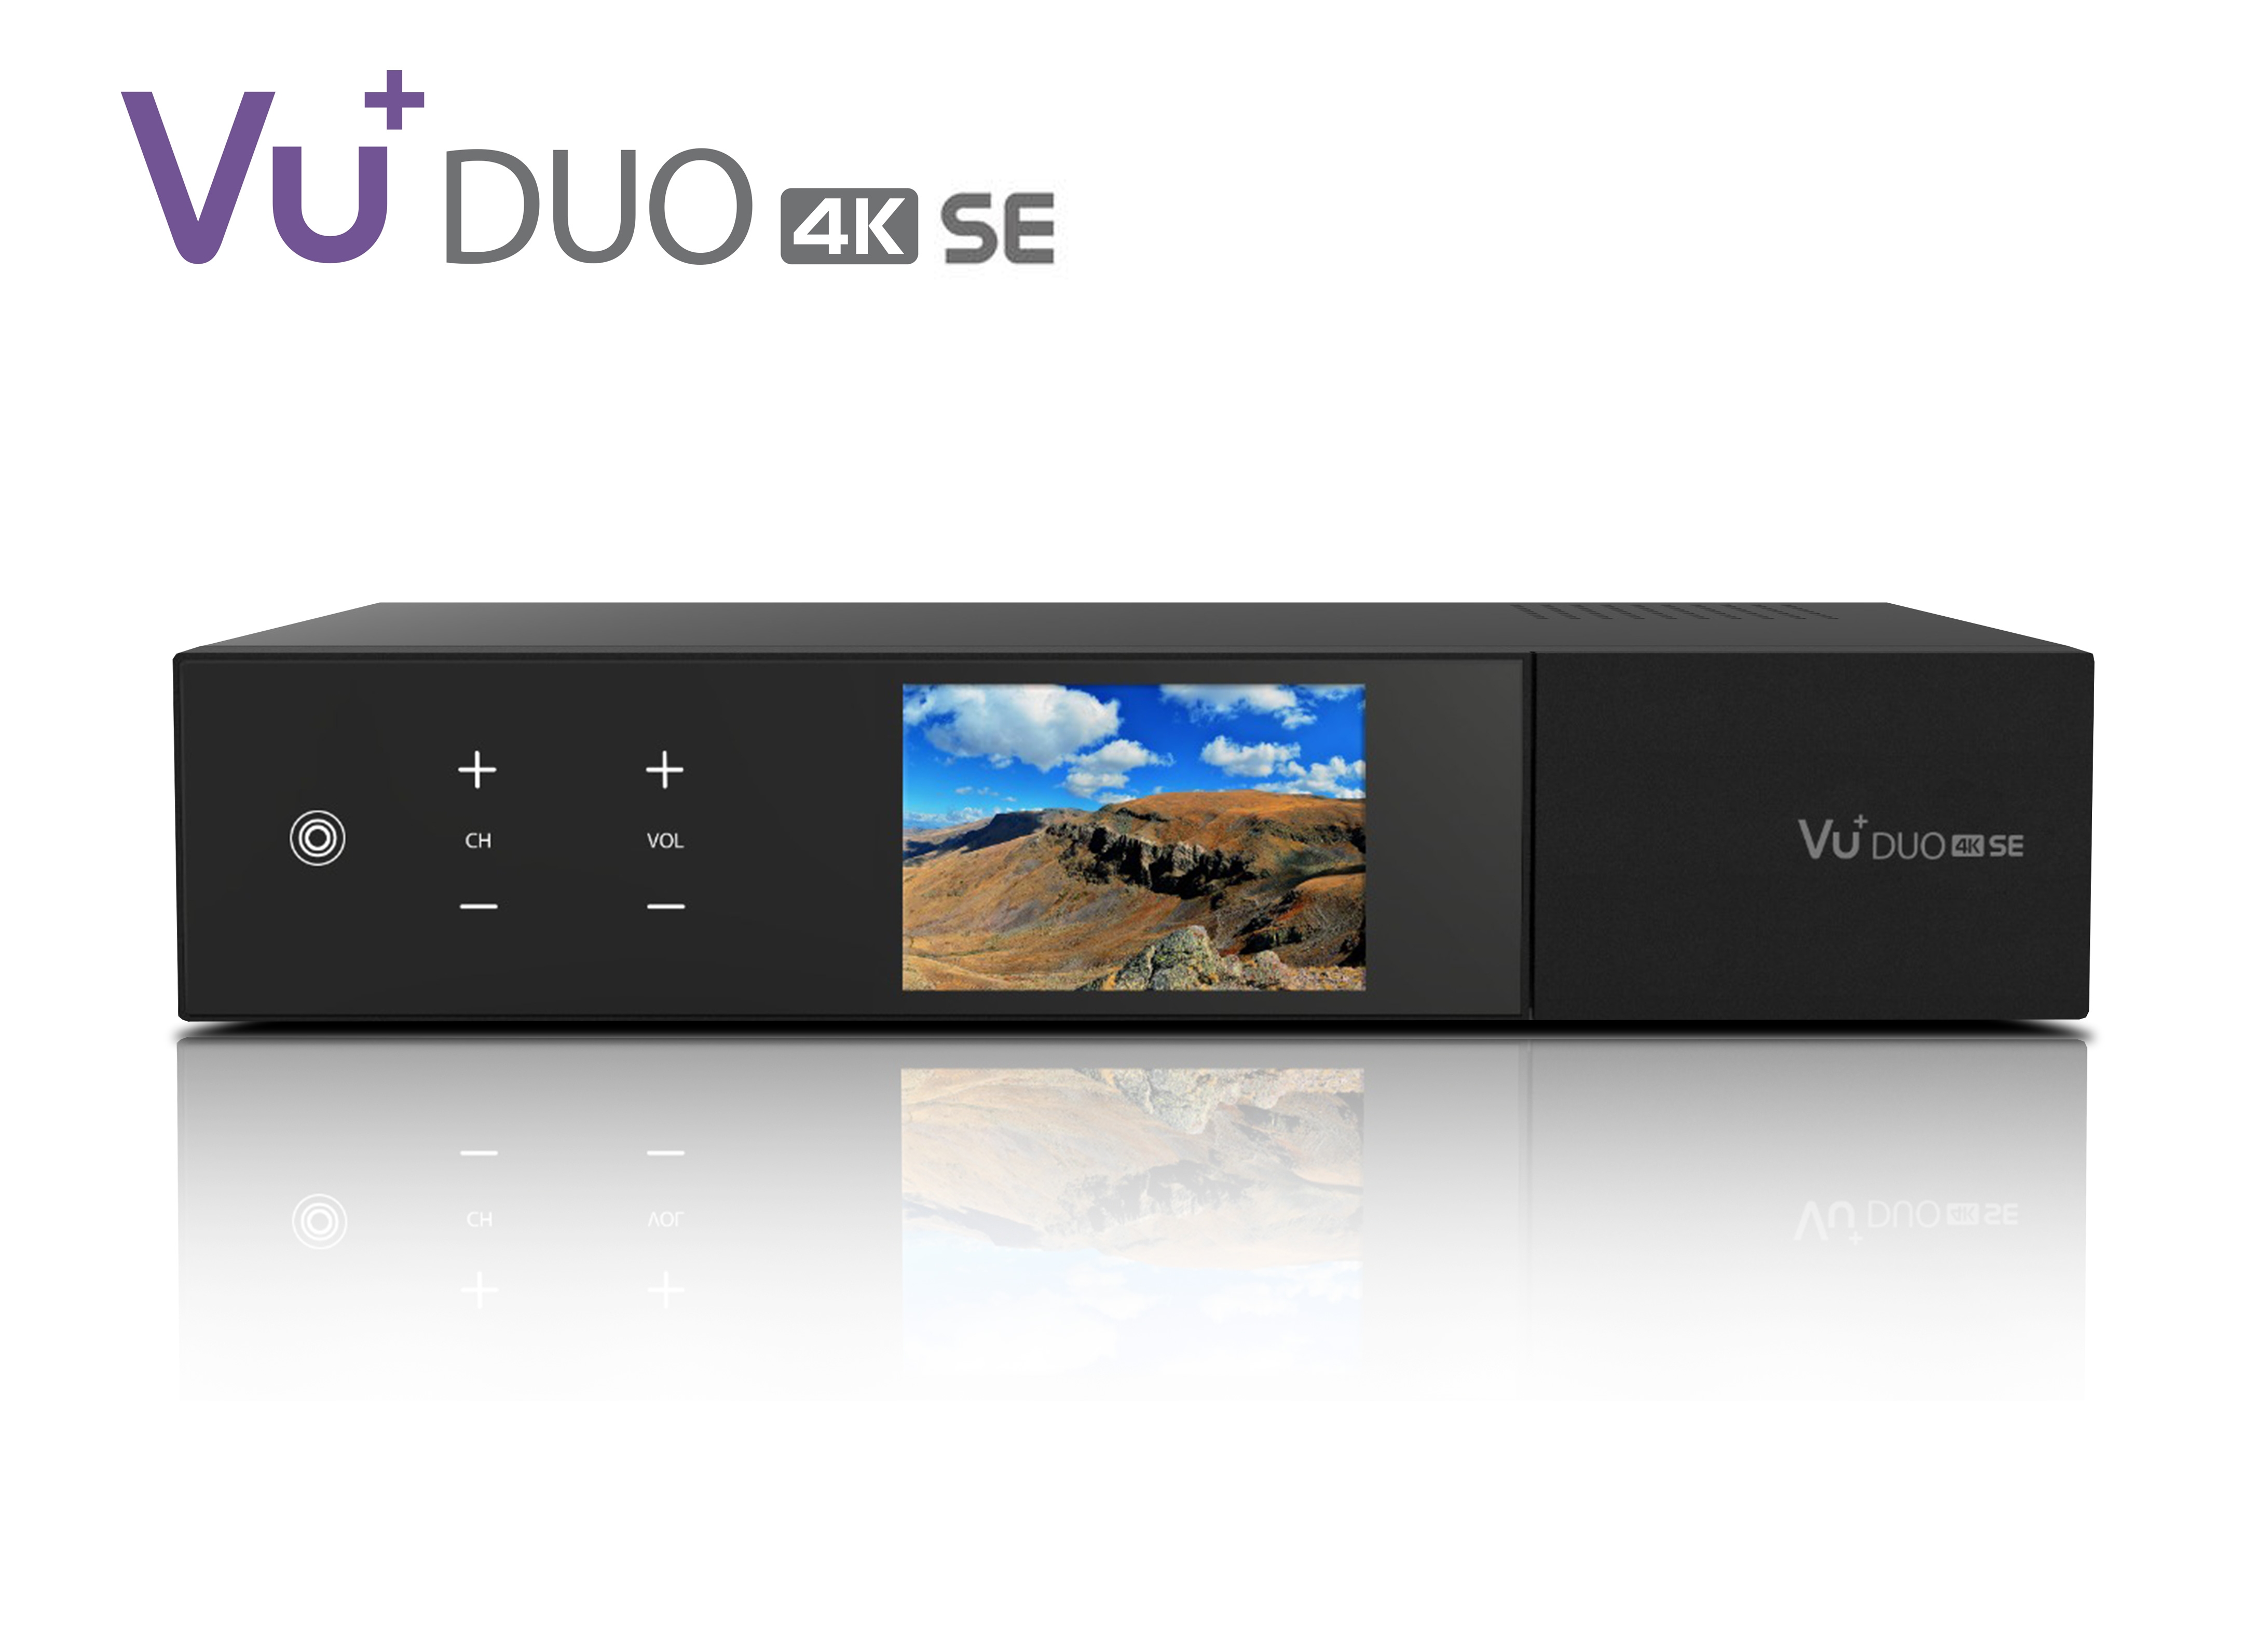 VU+ Duo 4K SE 2x DVB-T2 Dual Tuner 4 TB HDD Linux Receiver UHD 2160p